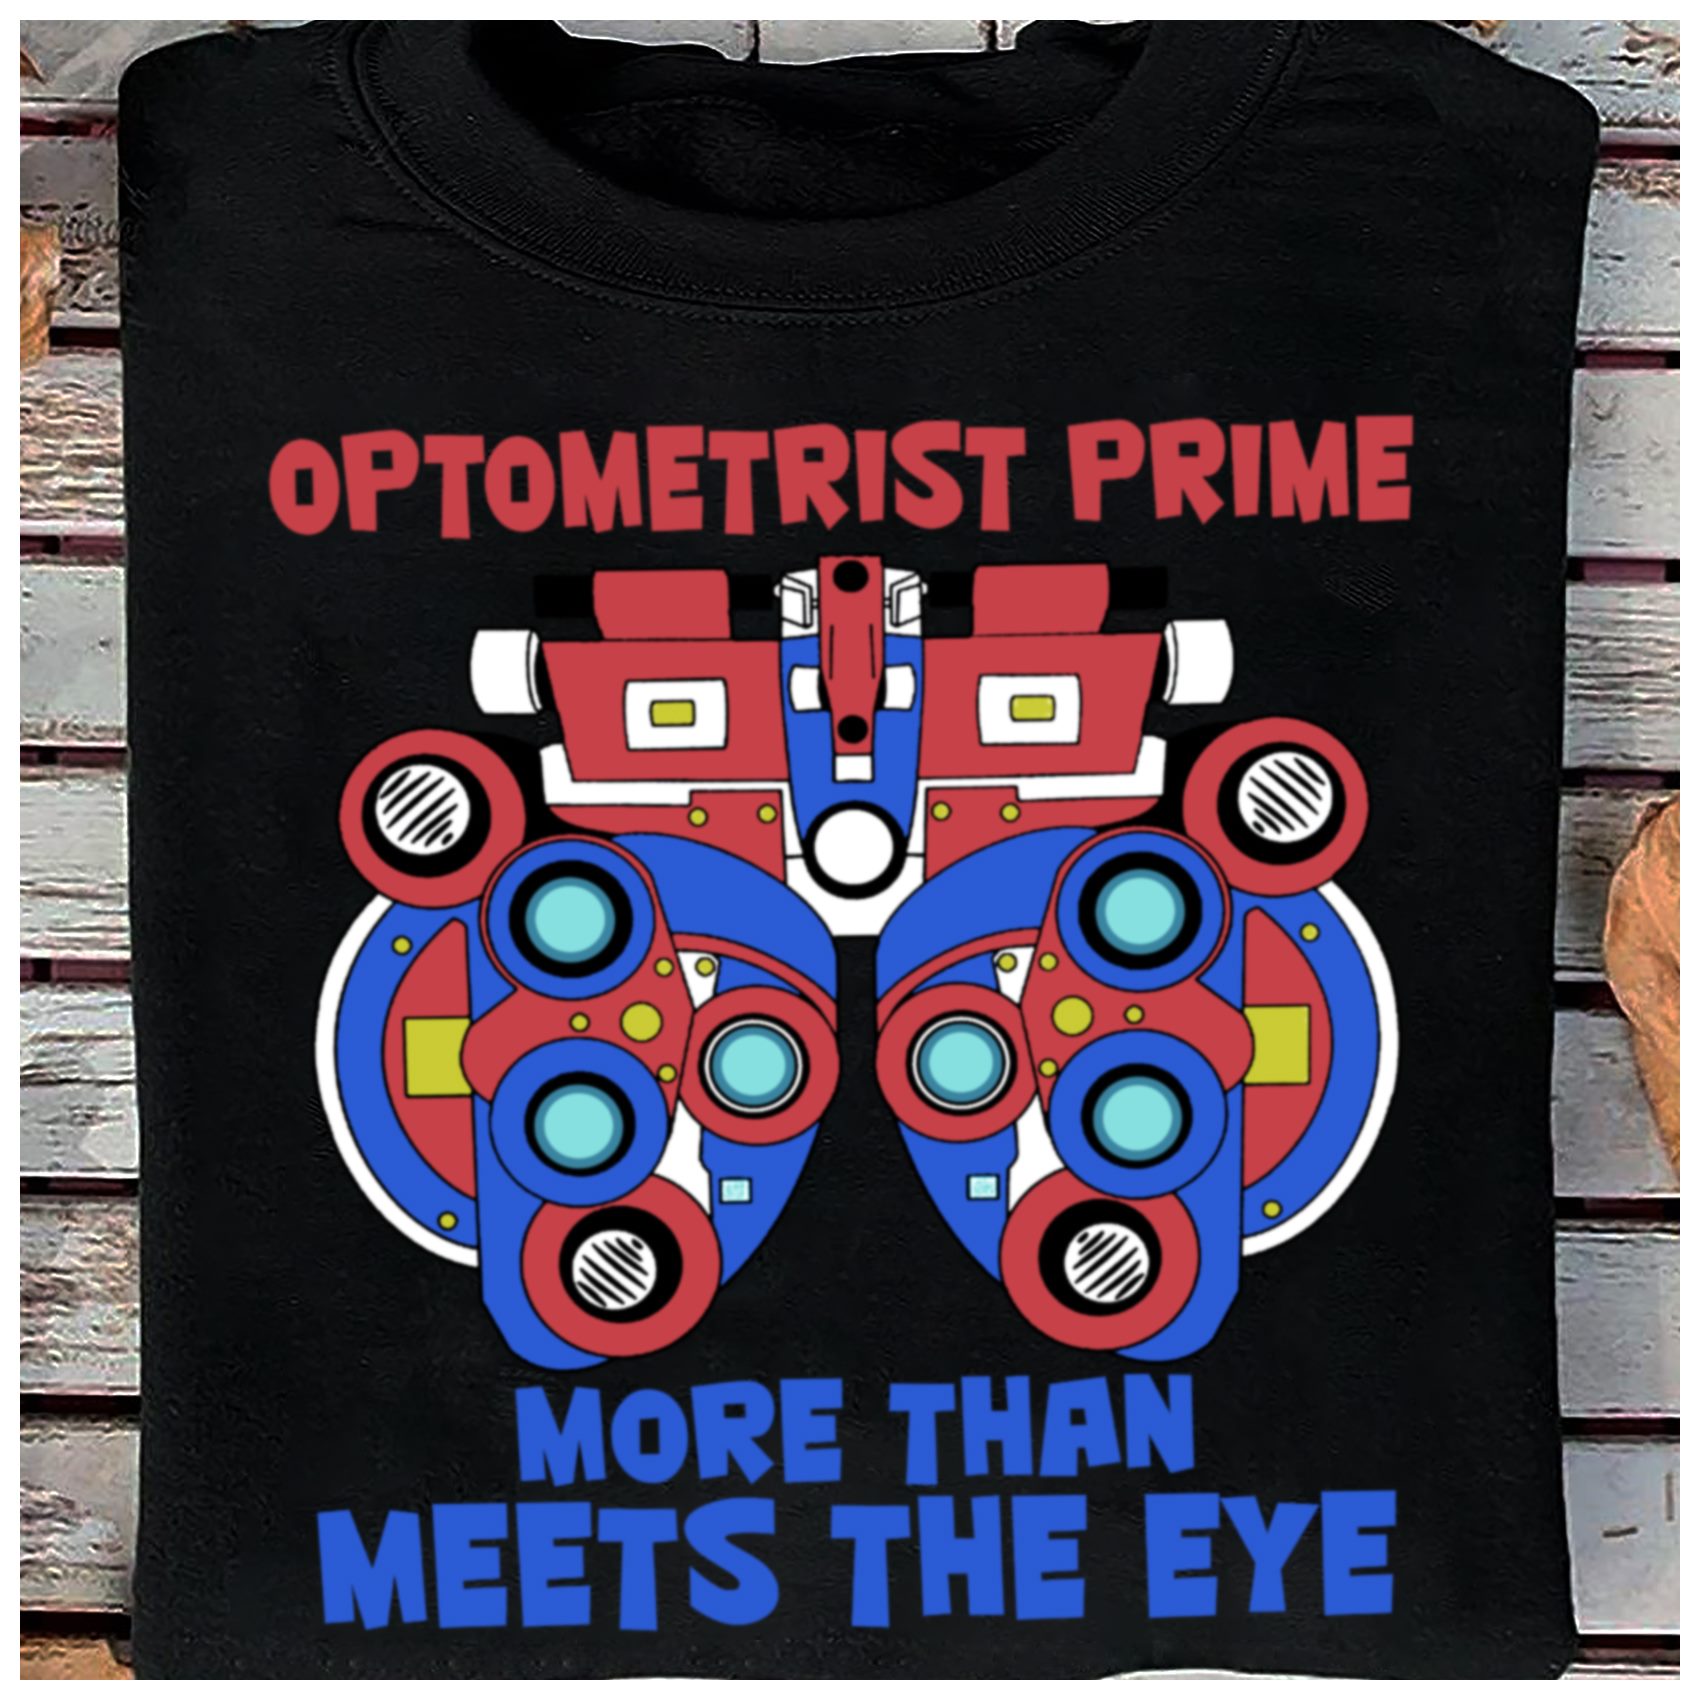 Optometrist prime more than meets the eye - Optometrist the job